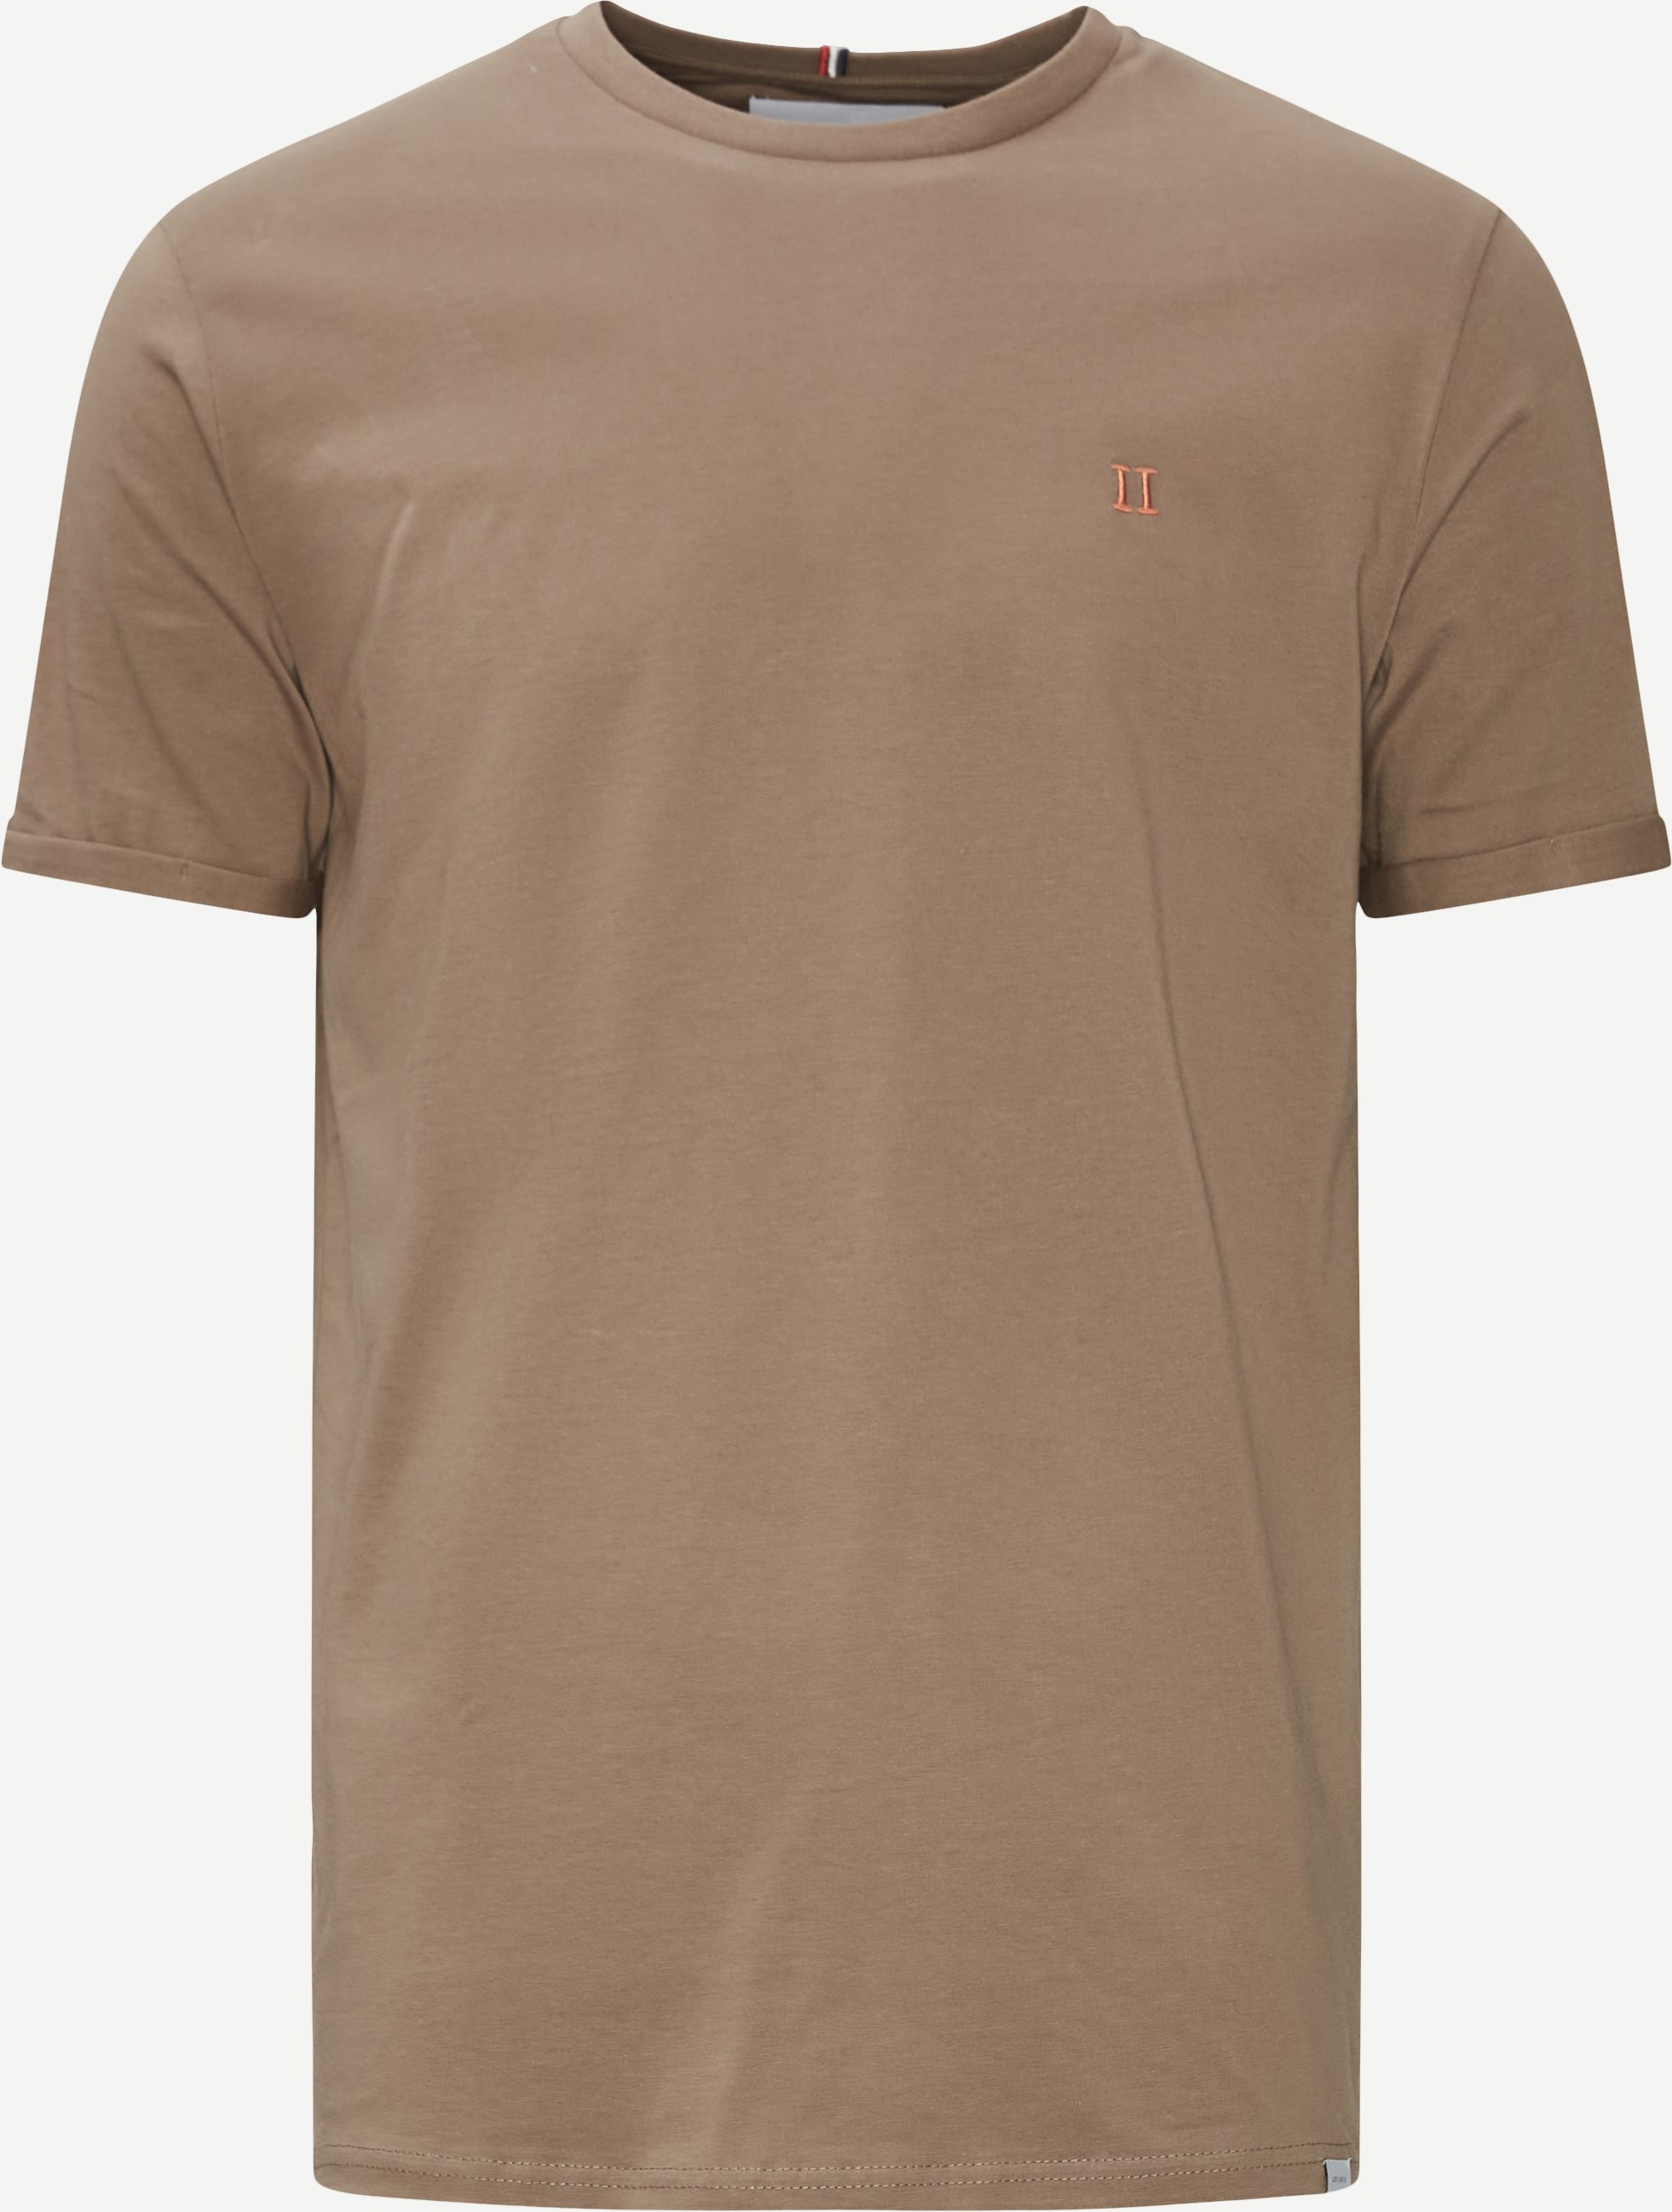 Les Deux T-shirts NØRREGAARD LDM101008 Brown